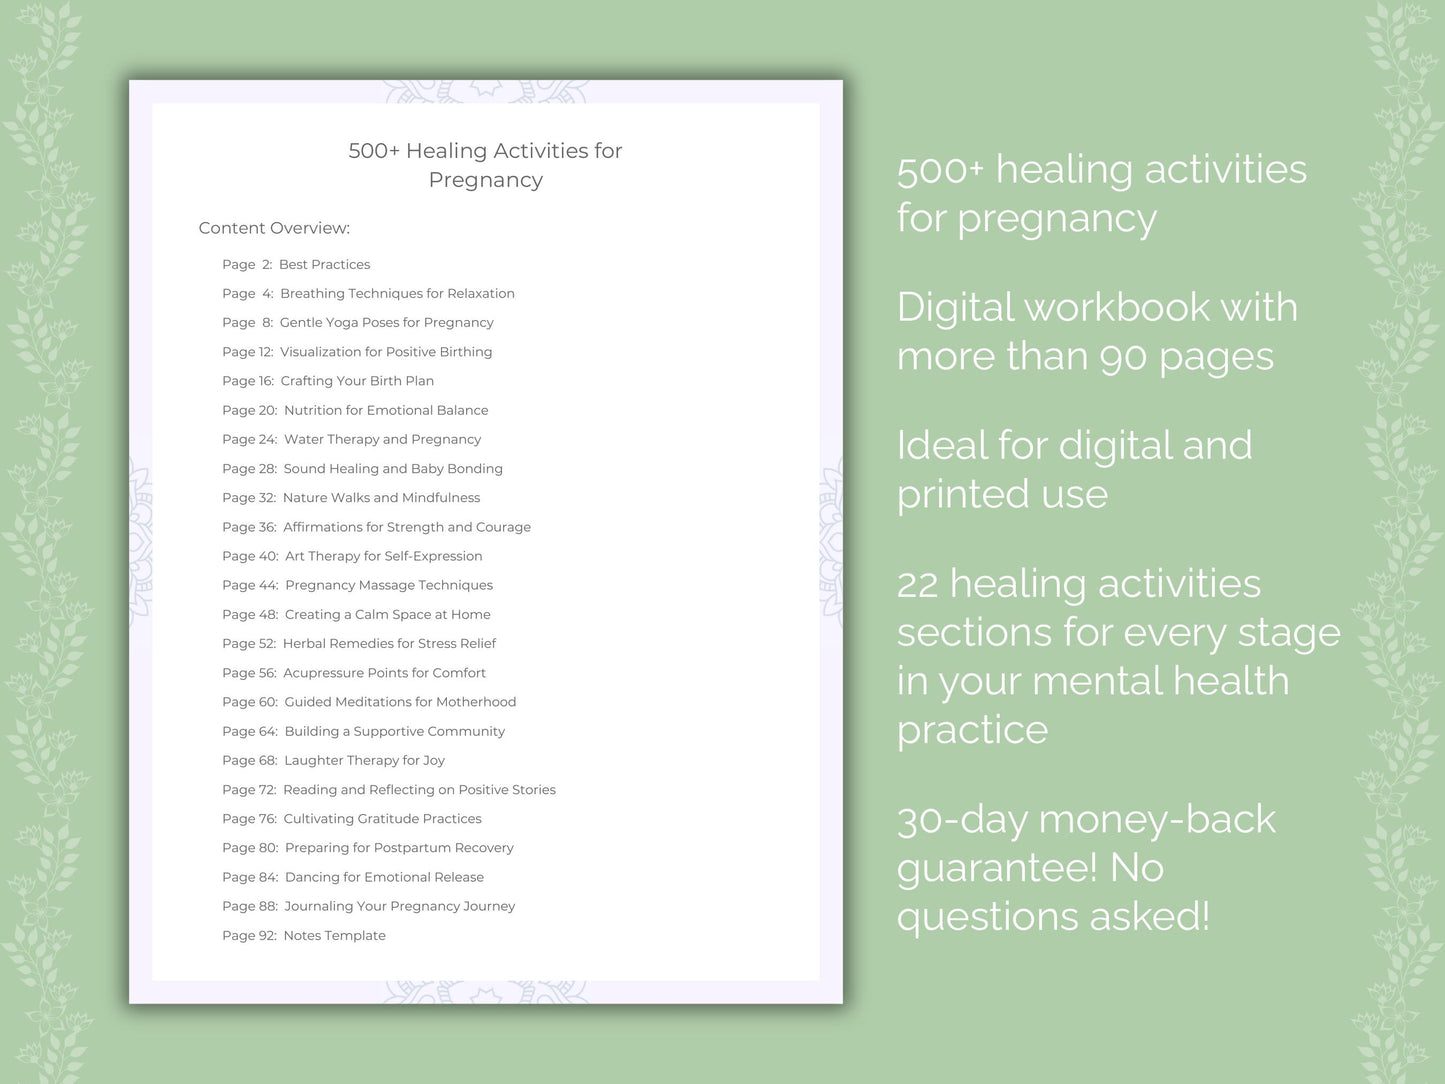 Pregnancy Activity, Pregnancy Healing, Pregnancy Therapy, Pregnancy Worksheet, Therapist, Pregnancy Workbook, Counselor, Pregnancy, Counseling, Pregnant, Pregnancy Task, Pregnancy Template, MPregnancy, Pregnant, Counselor, Pregnancy Template, Pregnancy Activity, Pregnancy Healing, Counseling, Therapist, Pregnancy Task, Pregnancy Worksheet, Mental Health, Pregnancy Workbook, Pregnancy Therapyental Health